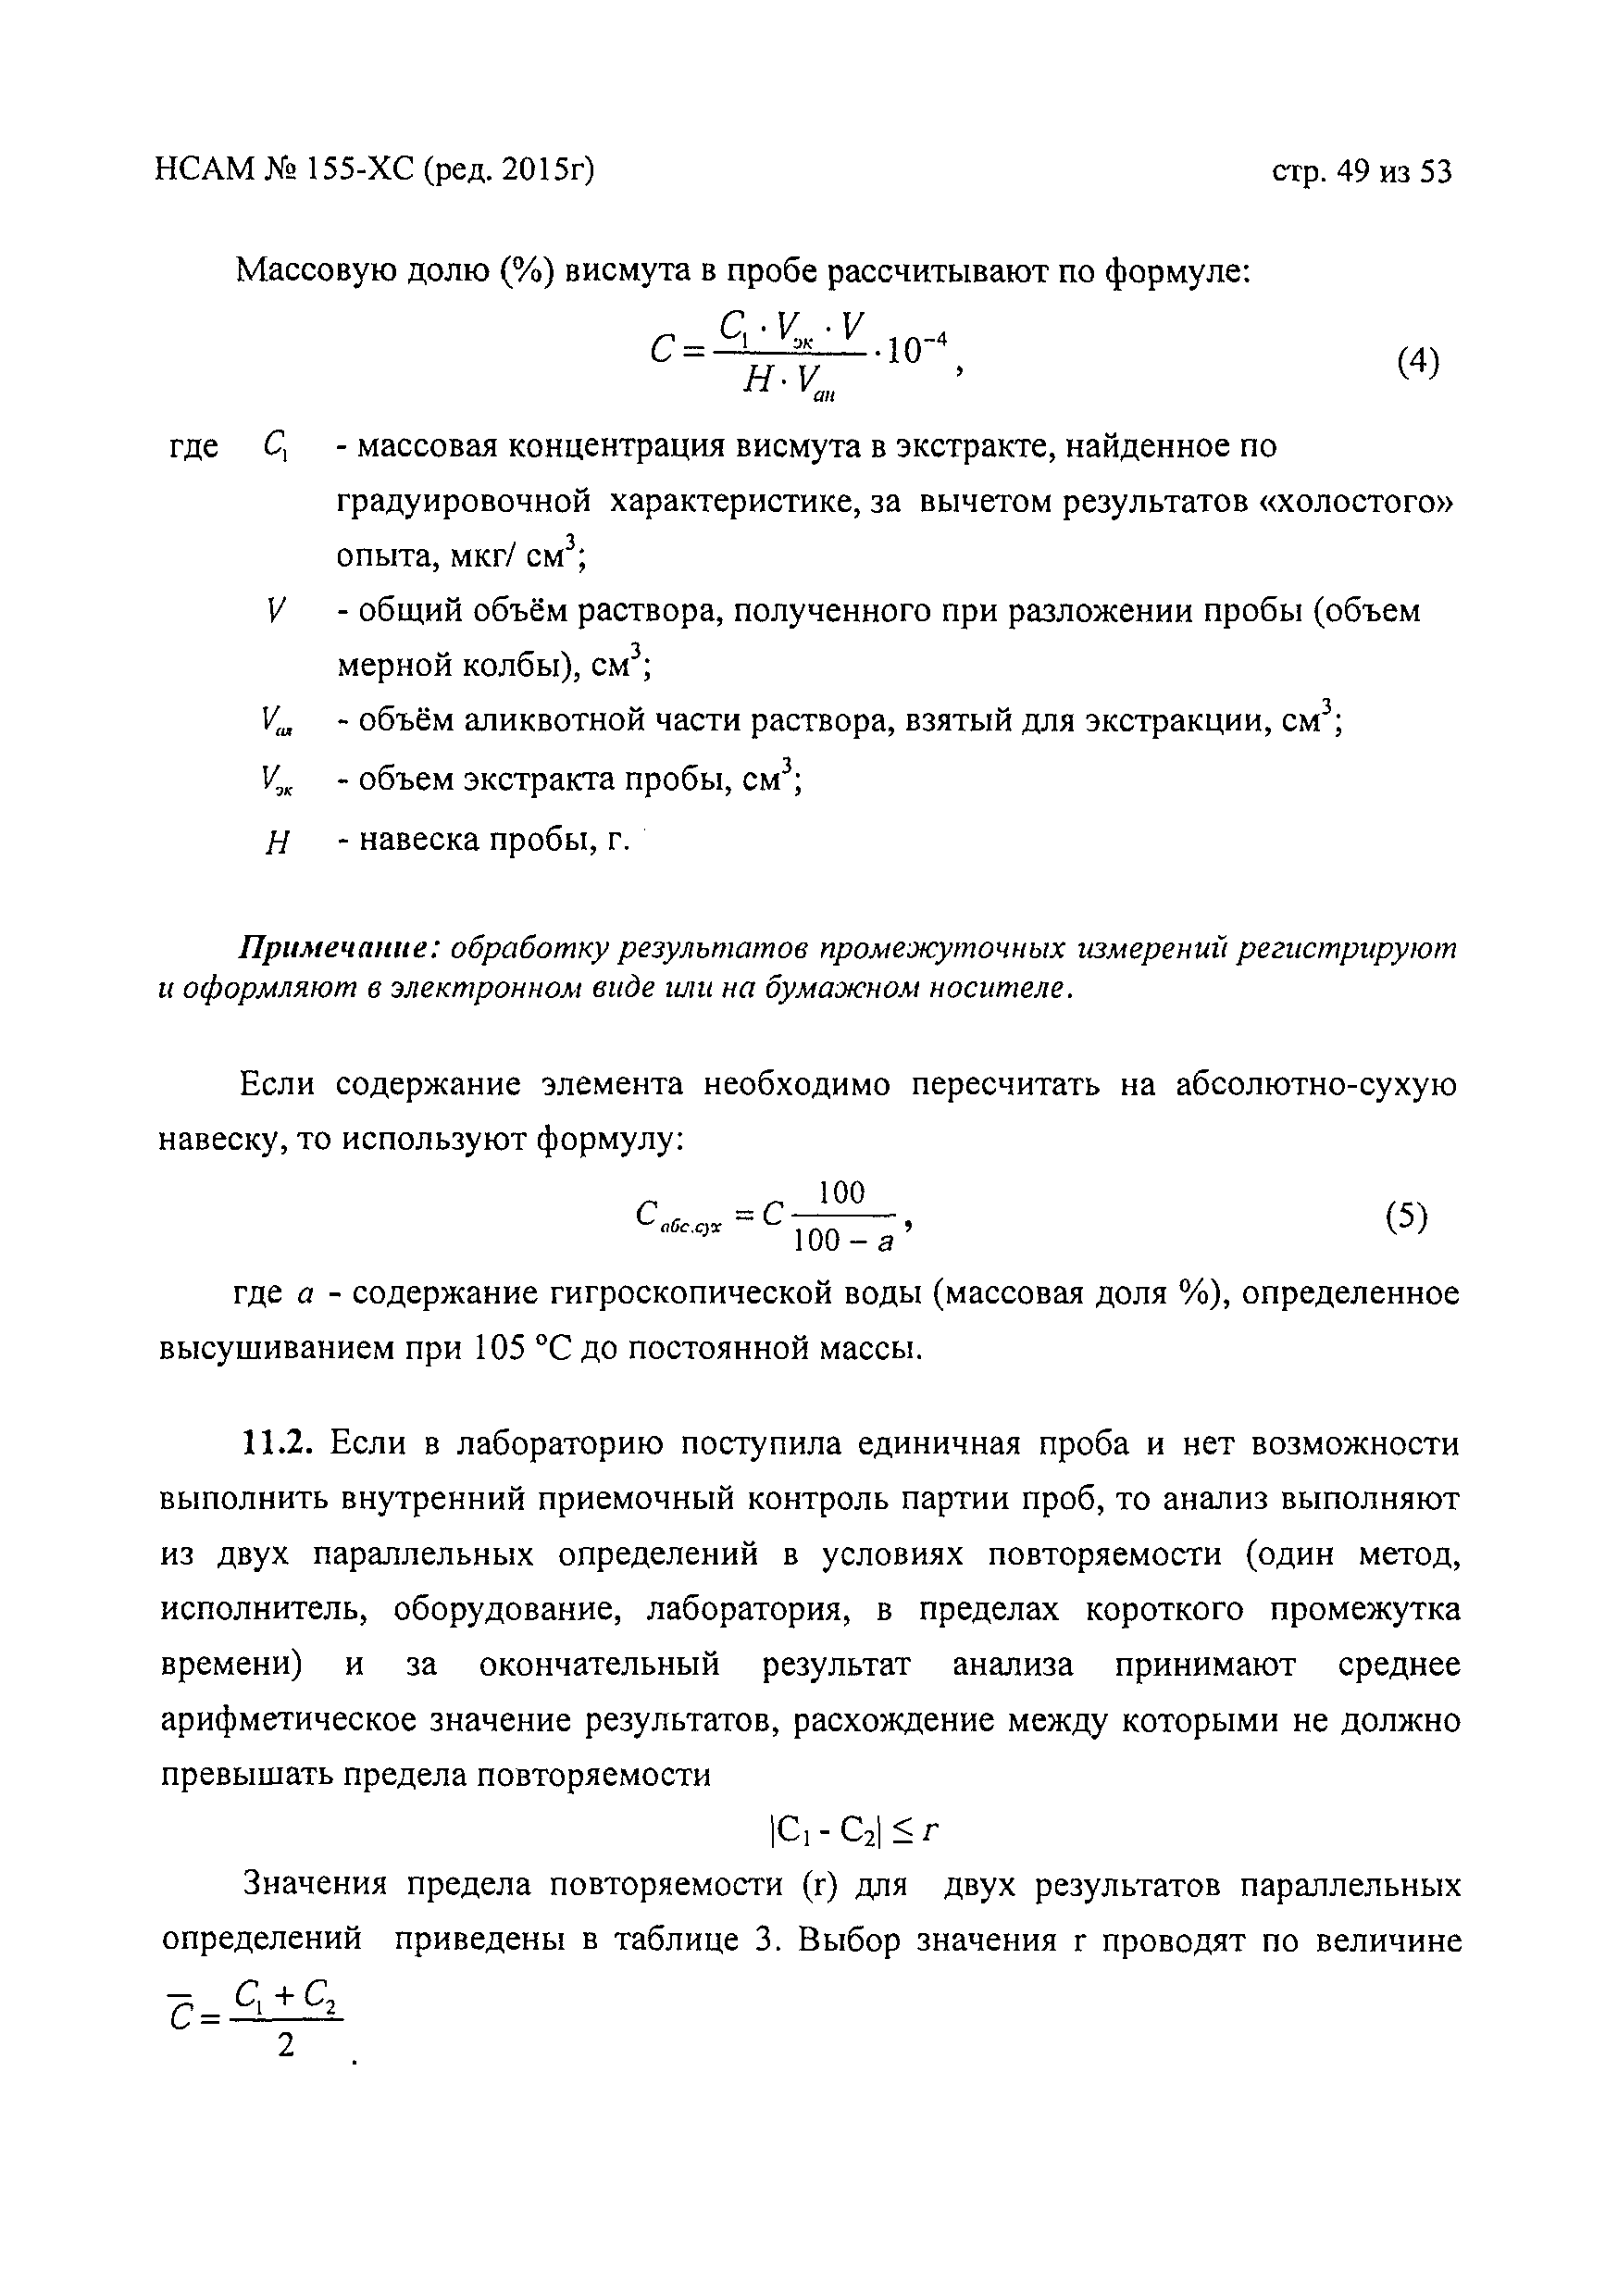 Методика НСАМ 155-ХС